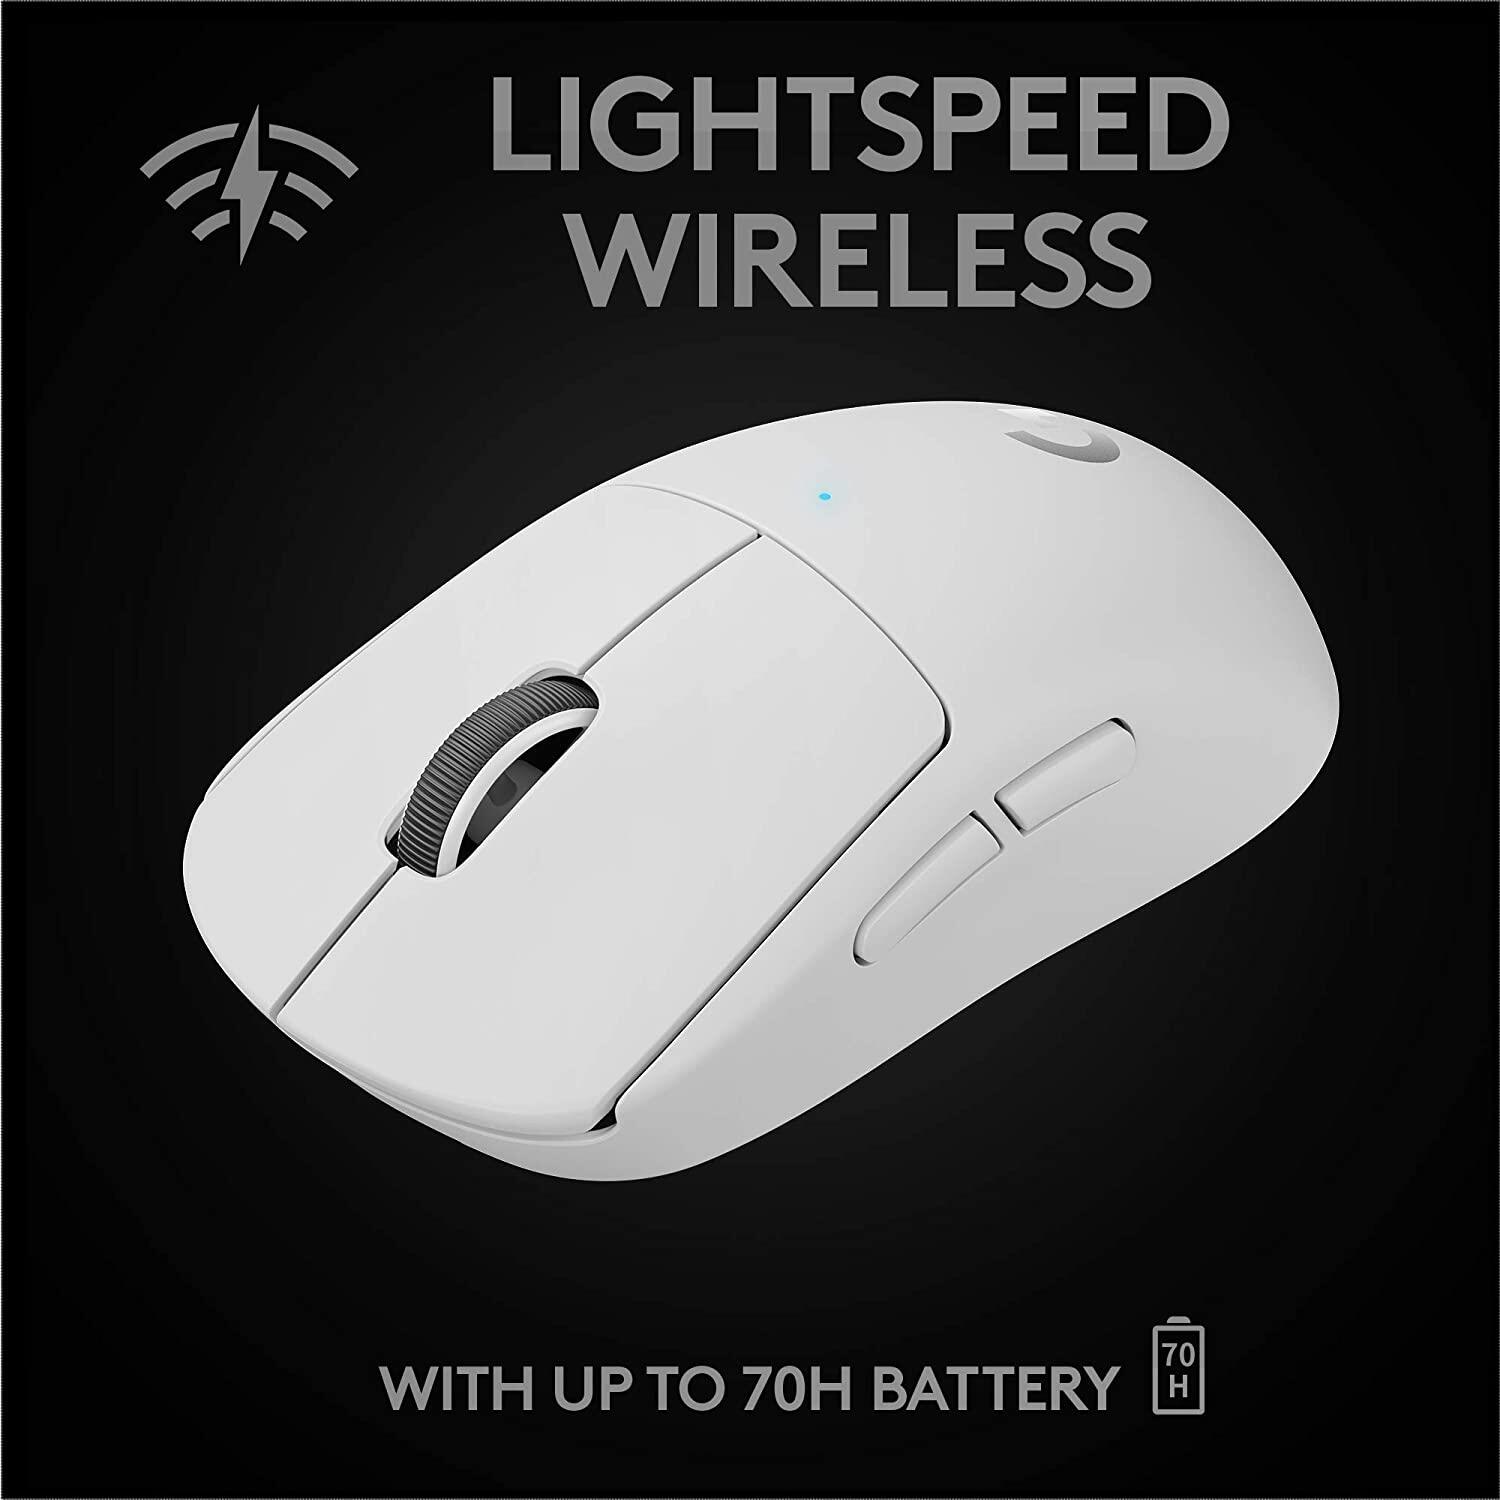 Logitech PRO X SUPERLIGHT Wireless Gaming Mouse With Hero 25K Sensor (910-005944) White